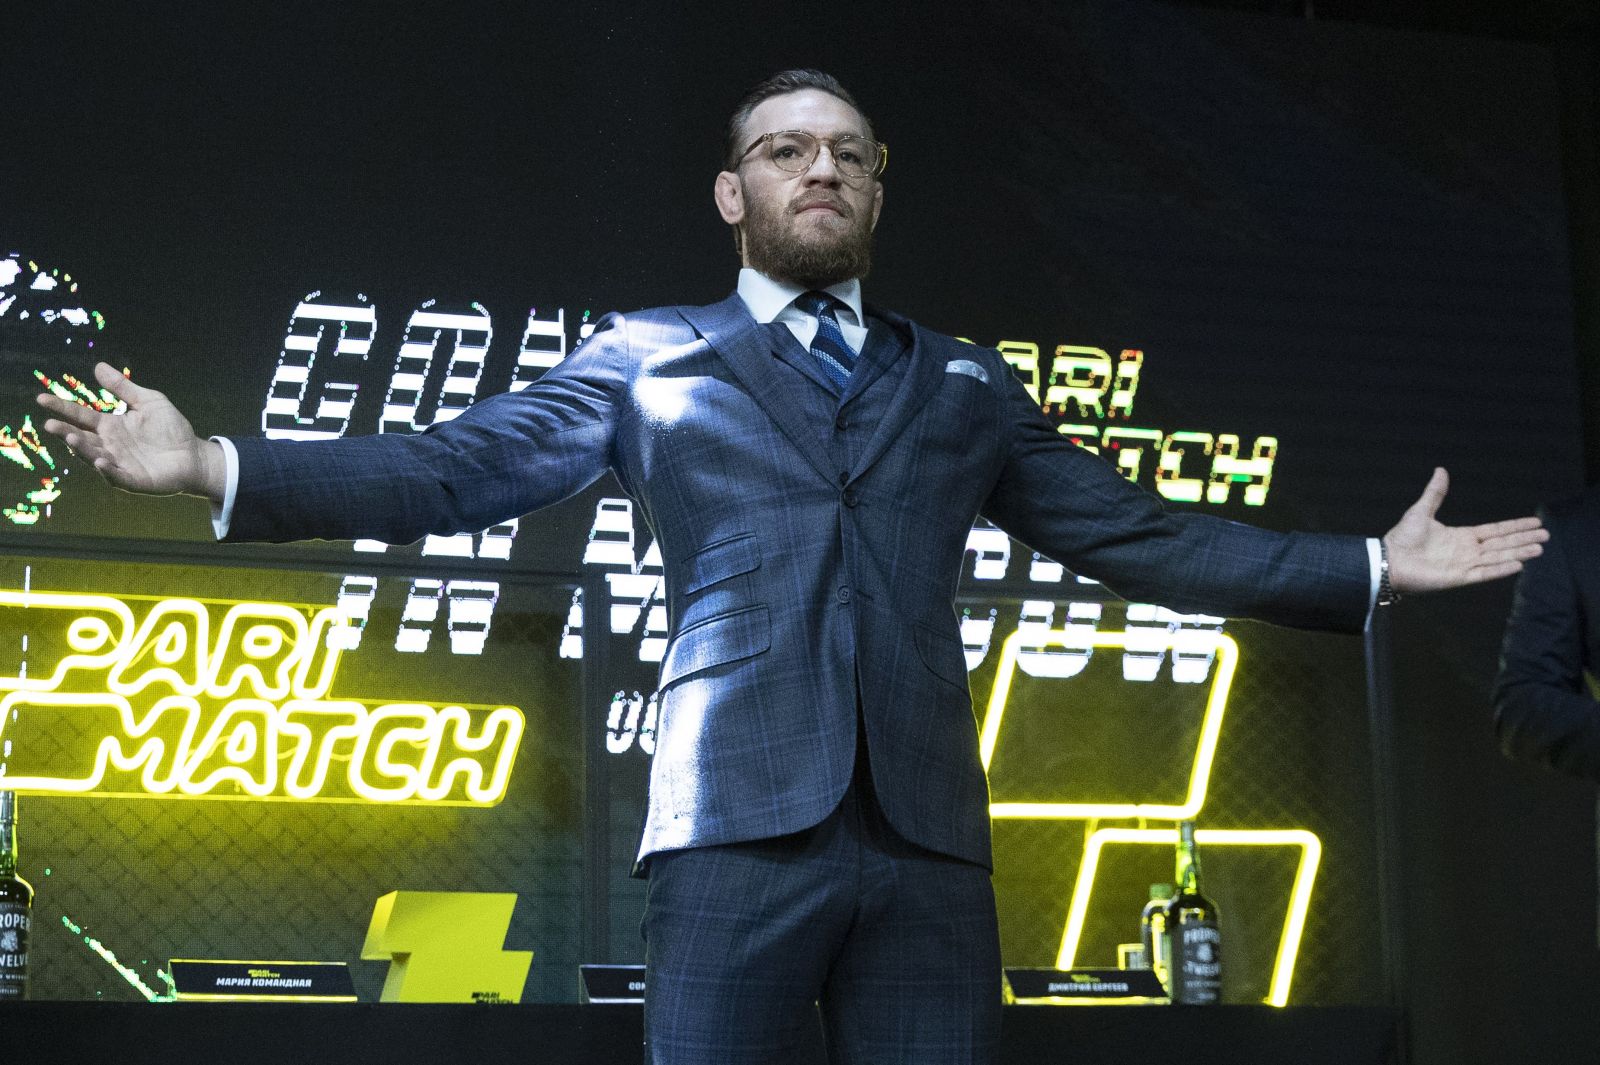 Conor McGregor ohlásil datum návratu do oktagonu! V roce 2020 chce mít 3 zápasy